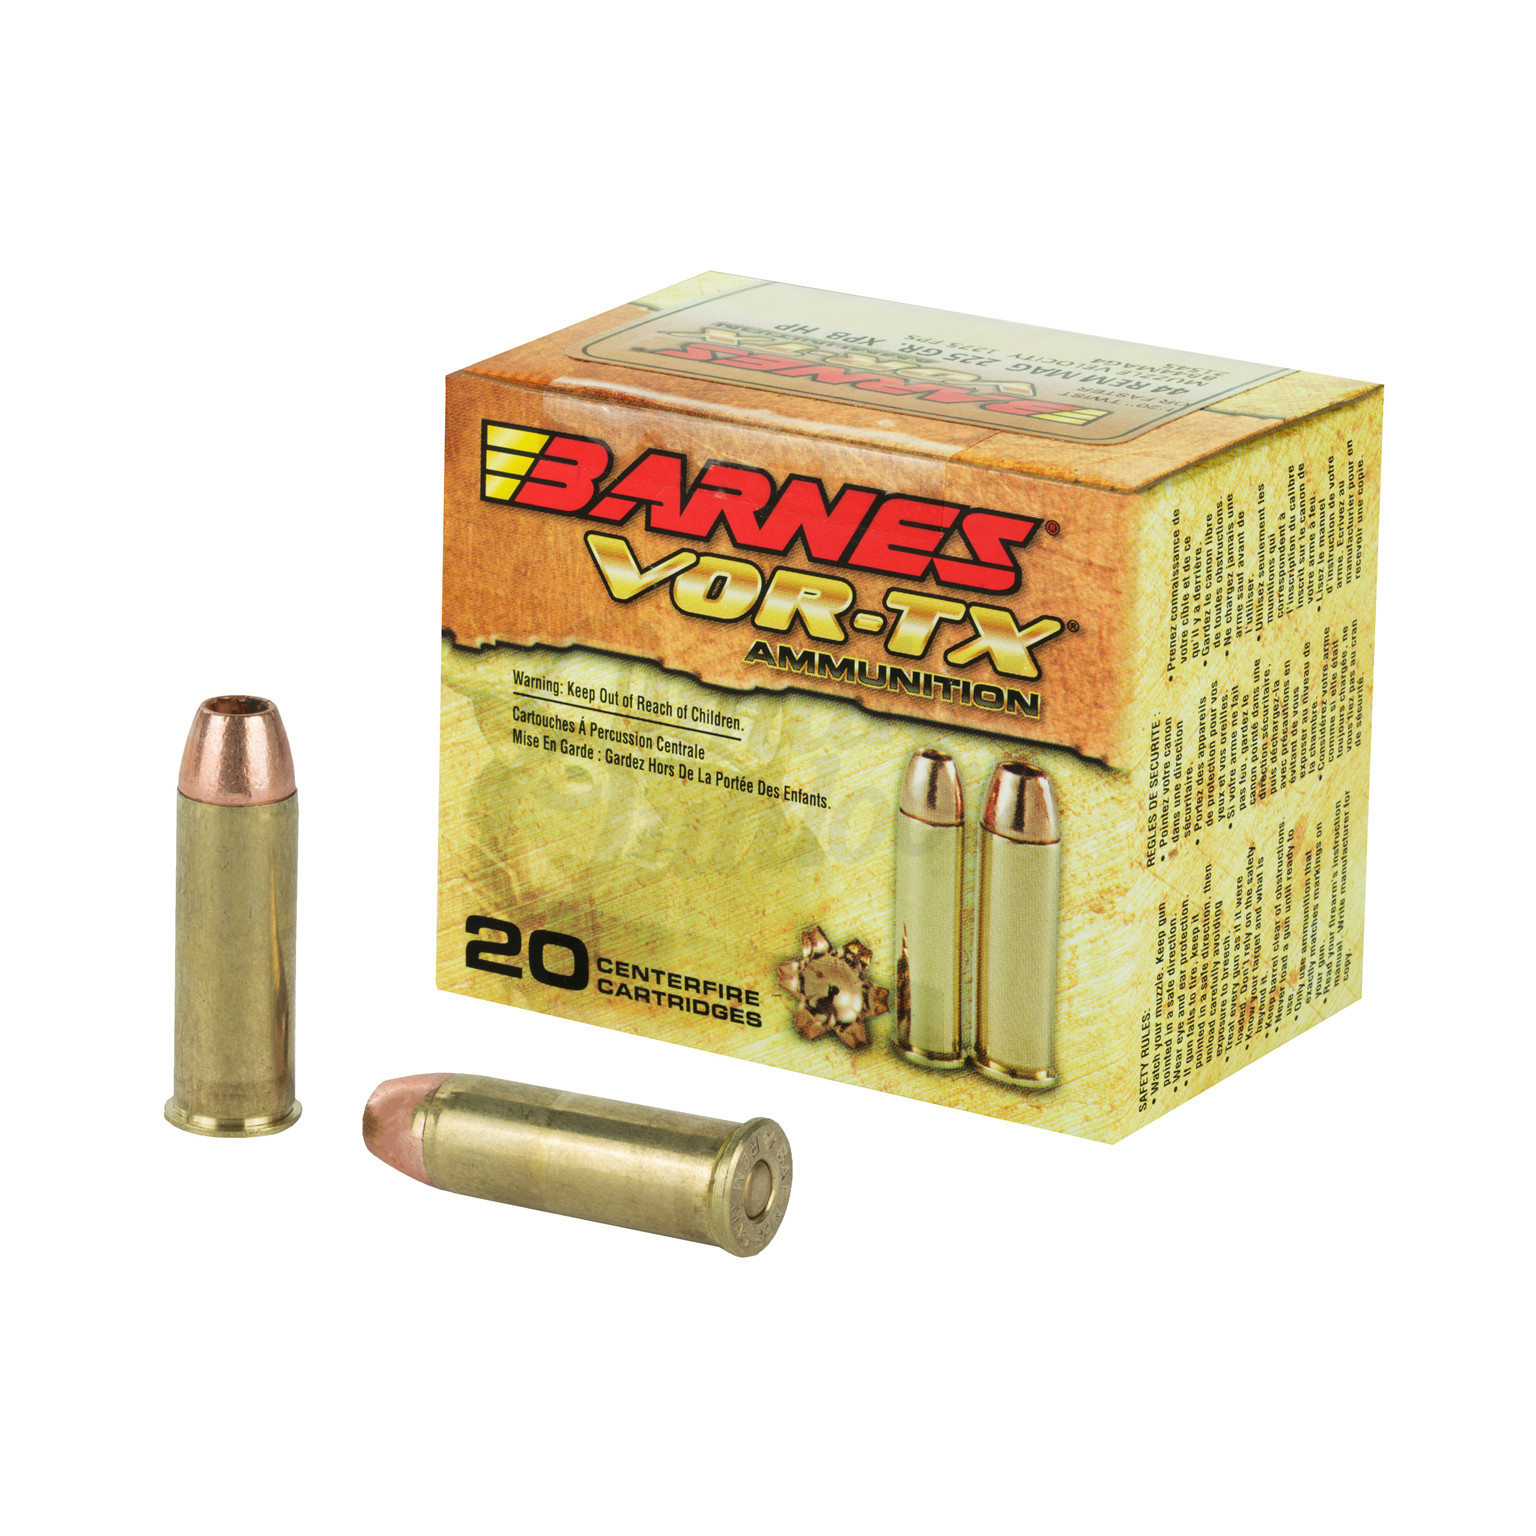 barnes-vor-tx-ammo-44-remington-mag-225-grain-xpb-hollow-point